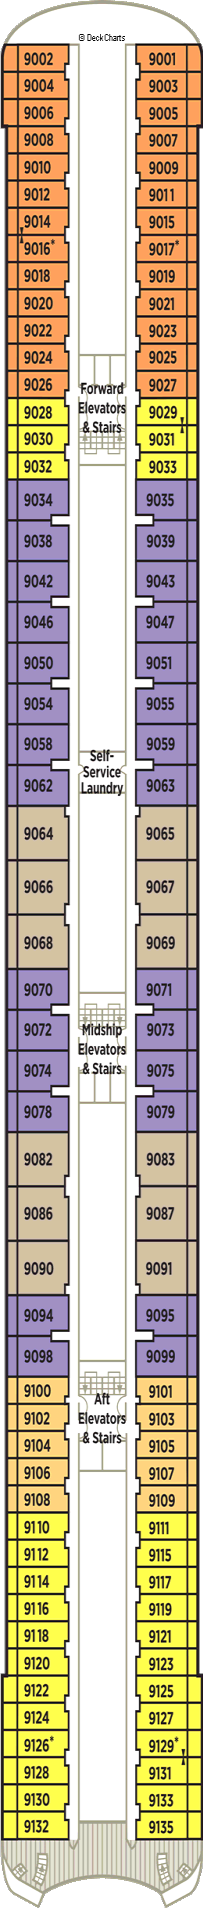 Crystal Cruises Symphony Deck plan Deck Image